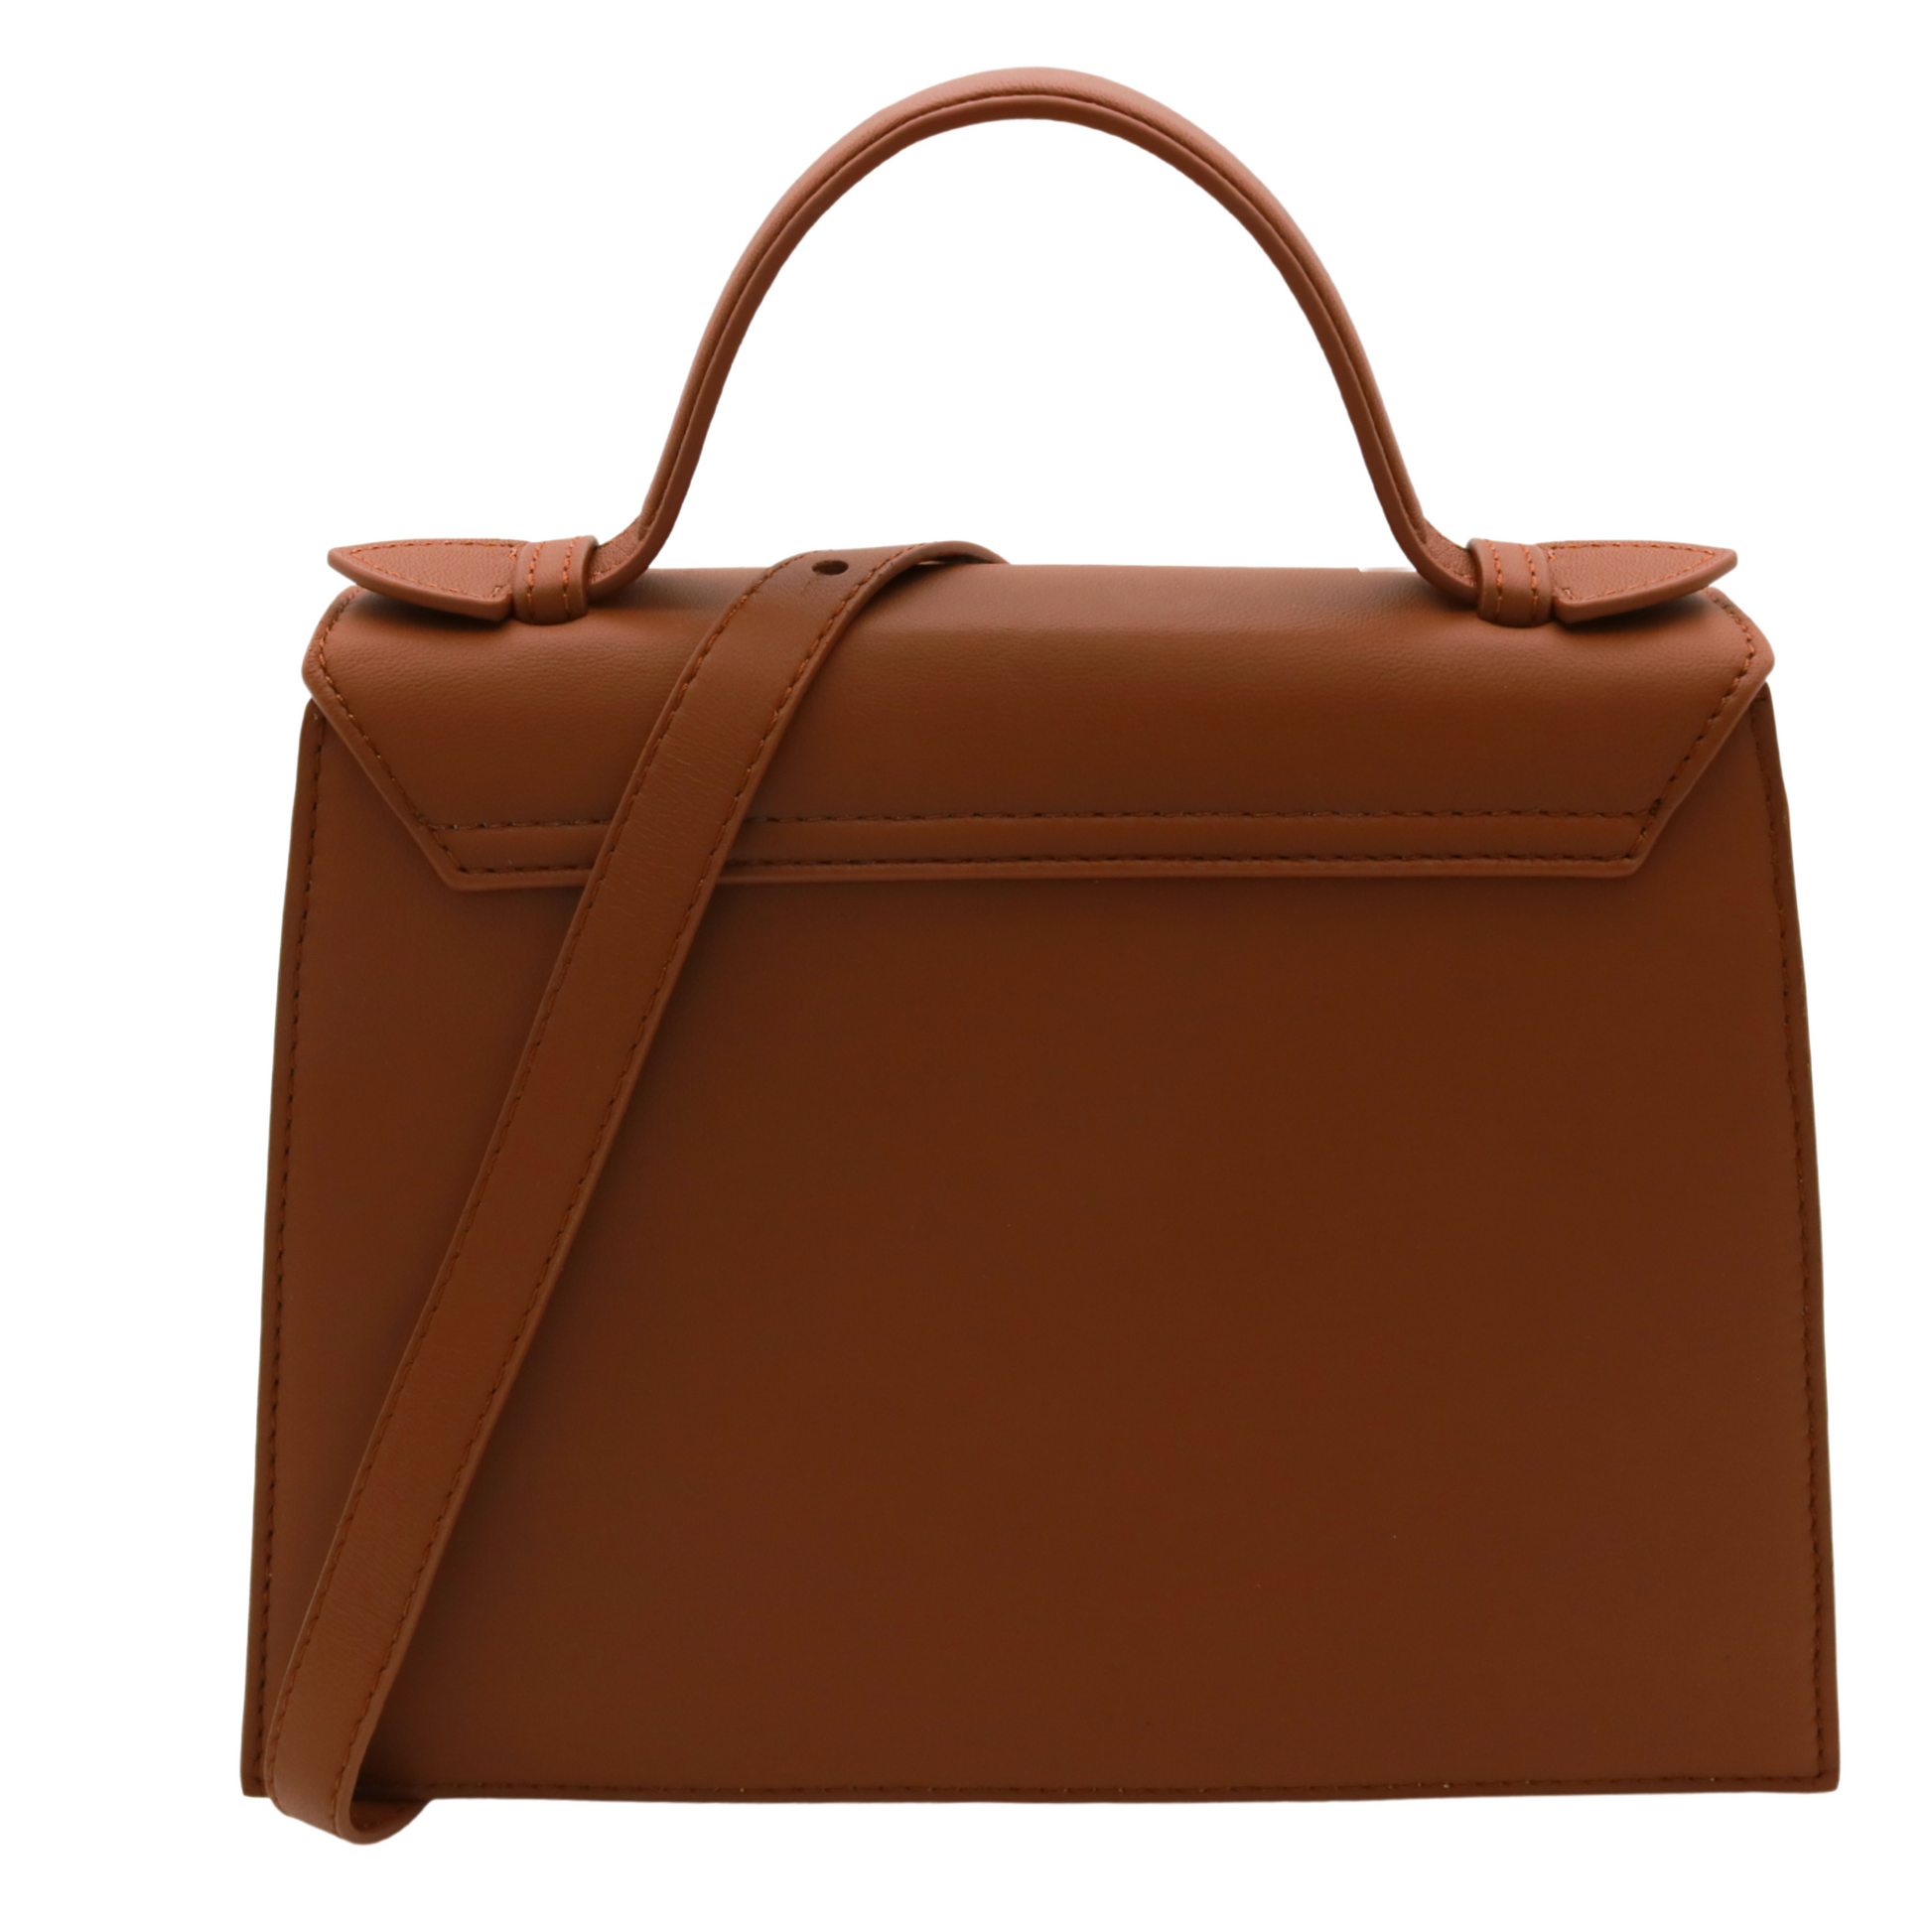 Penelope - Vintage Braided Leather Handbag - Handbags - FrasiBags